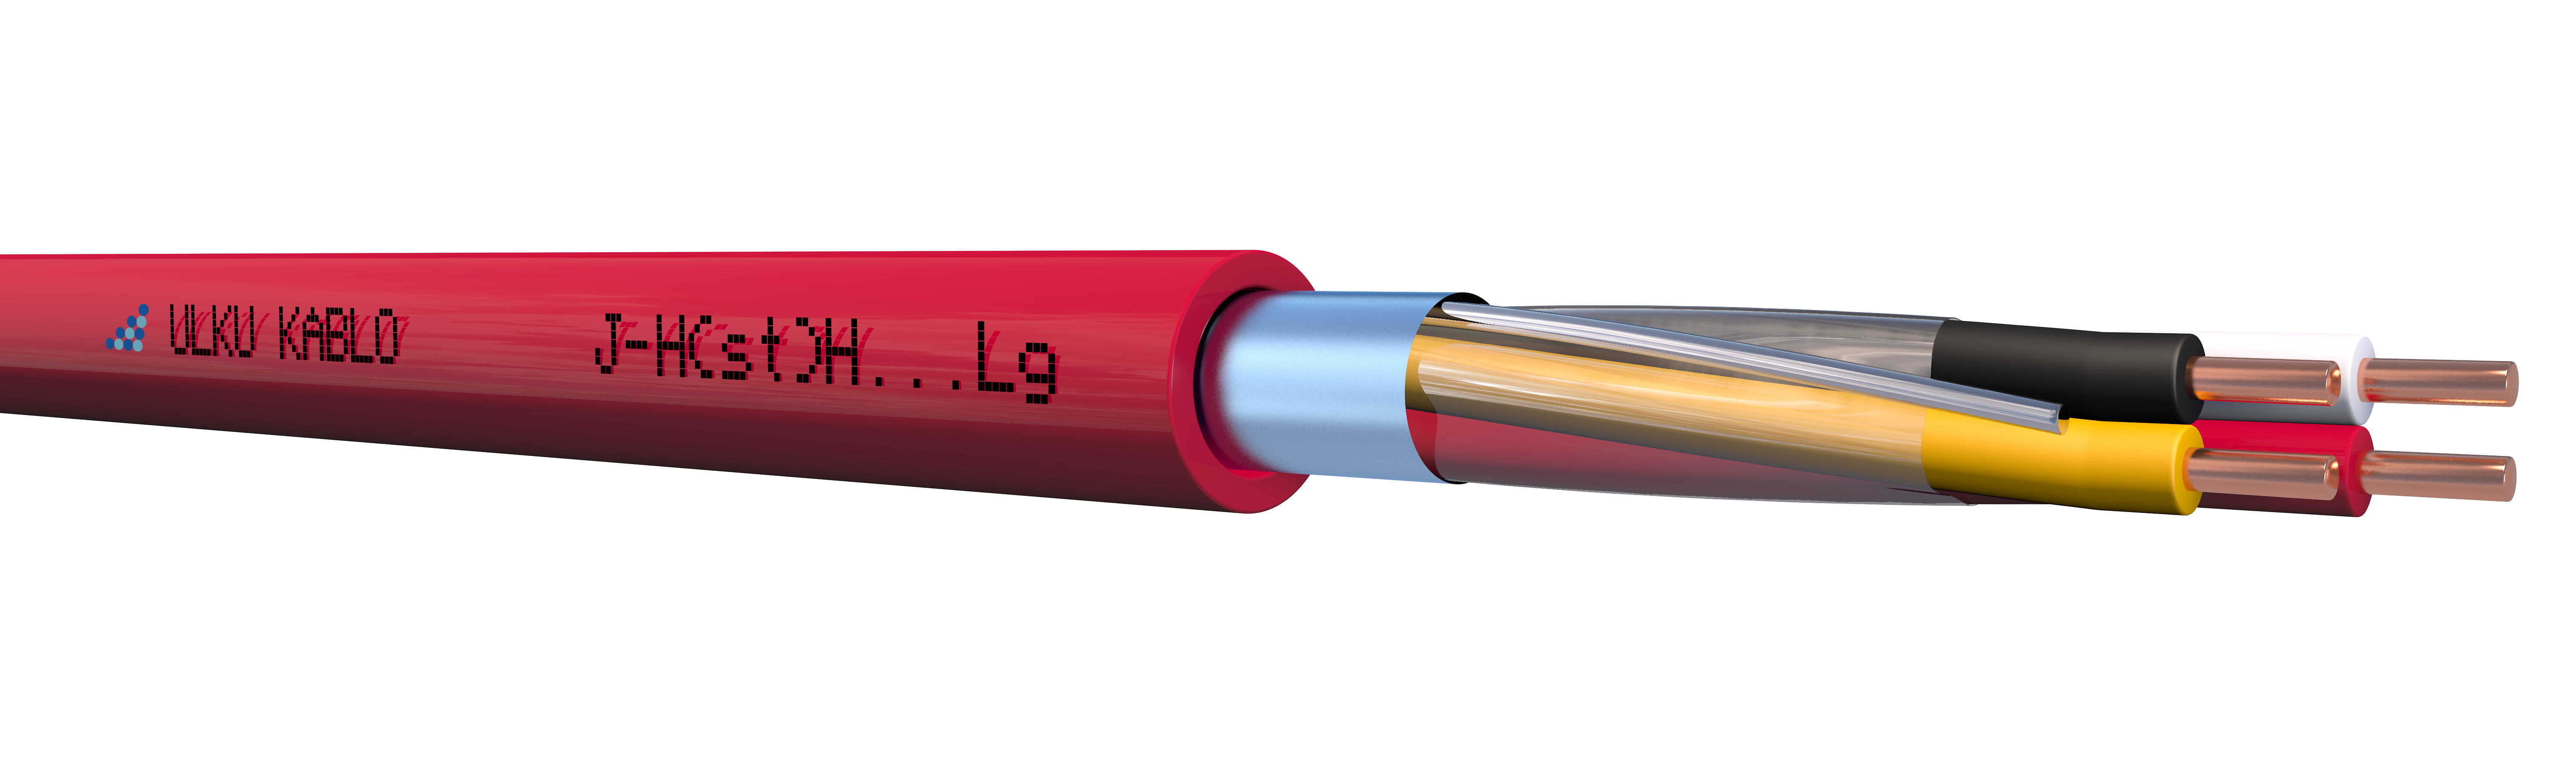 Ülkü Kablo J-H(St)H...Lg 2x2x1mm²+0,80mm